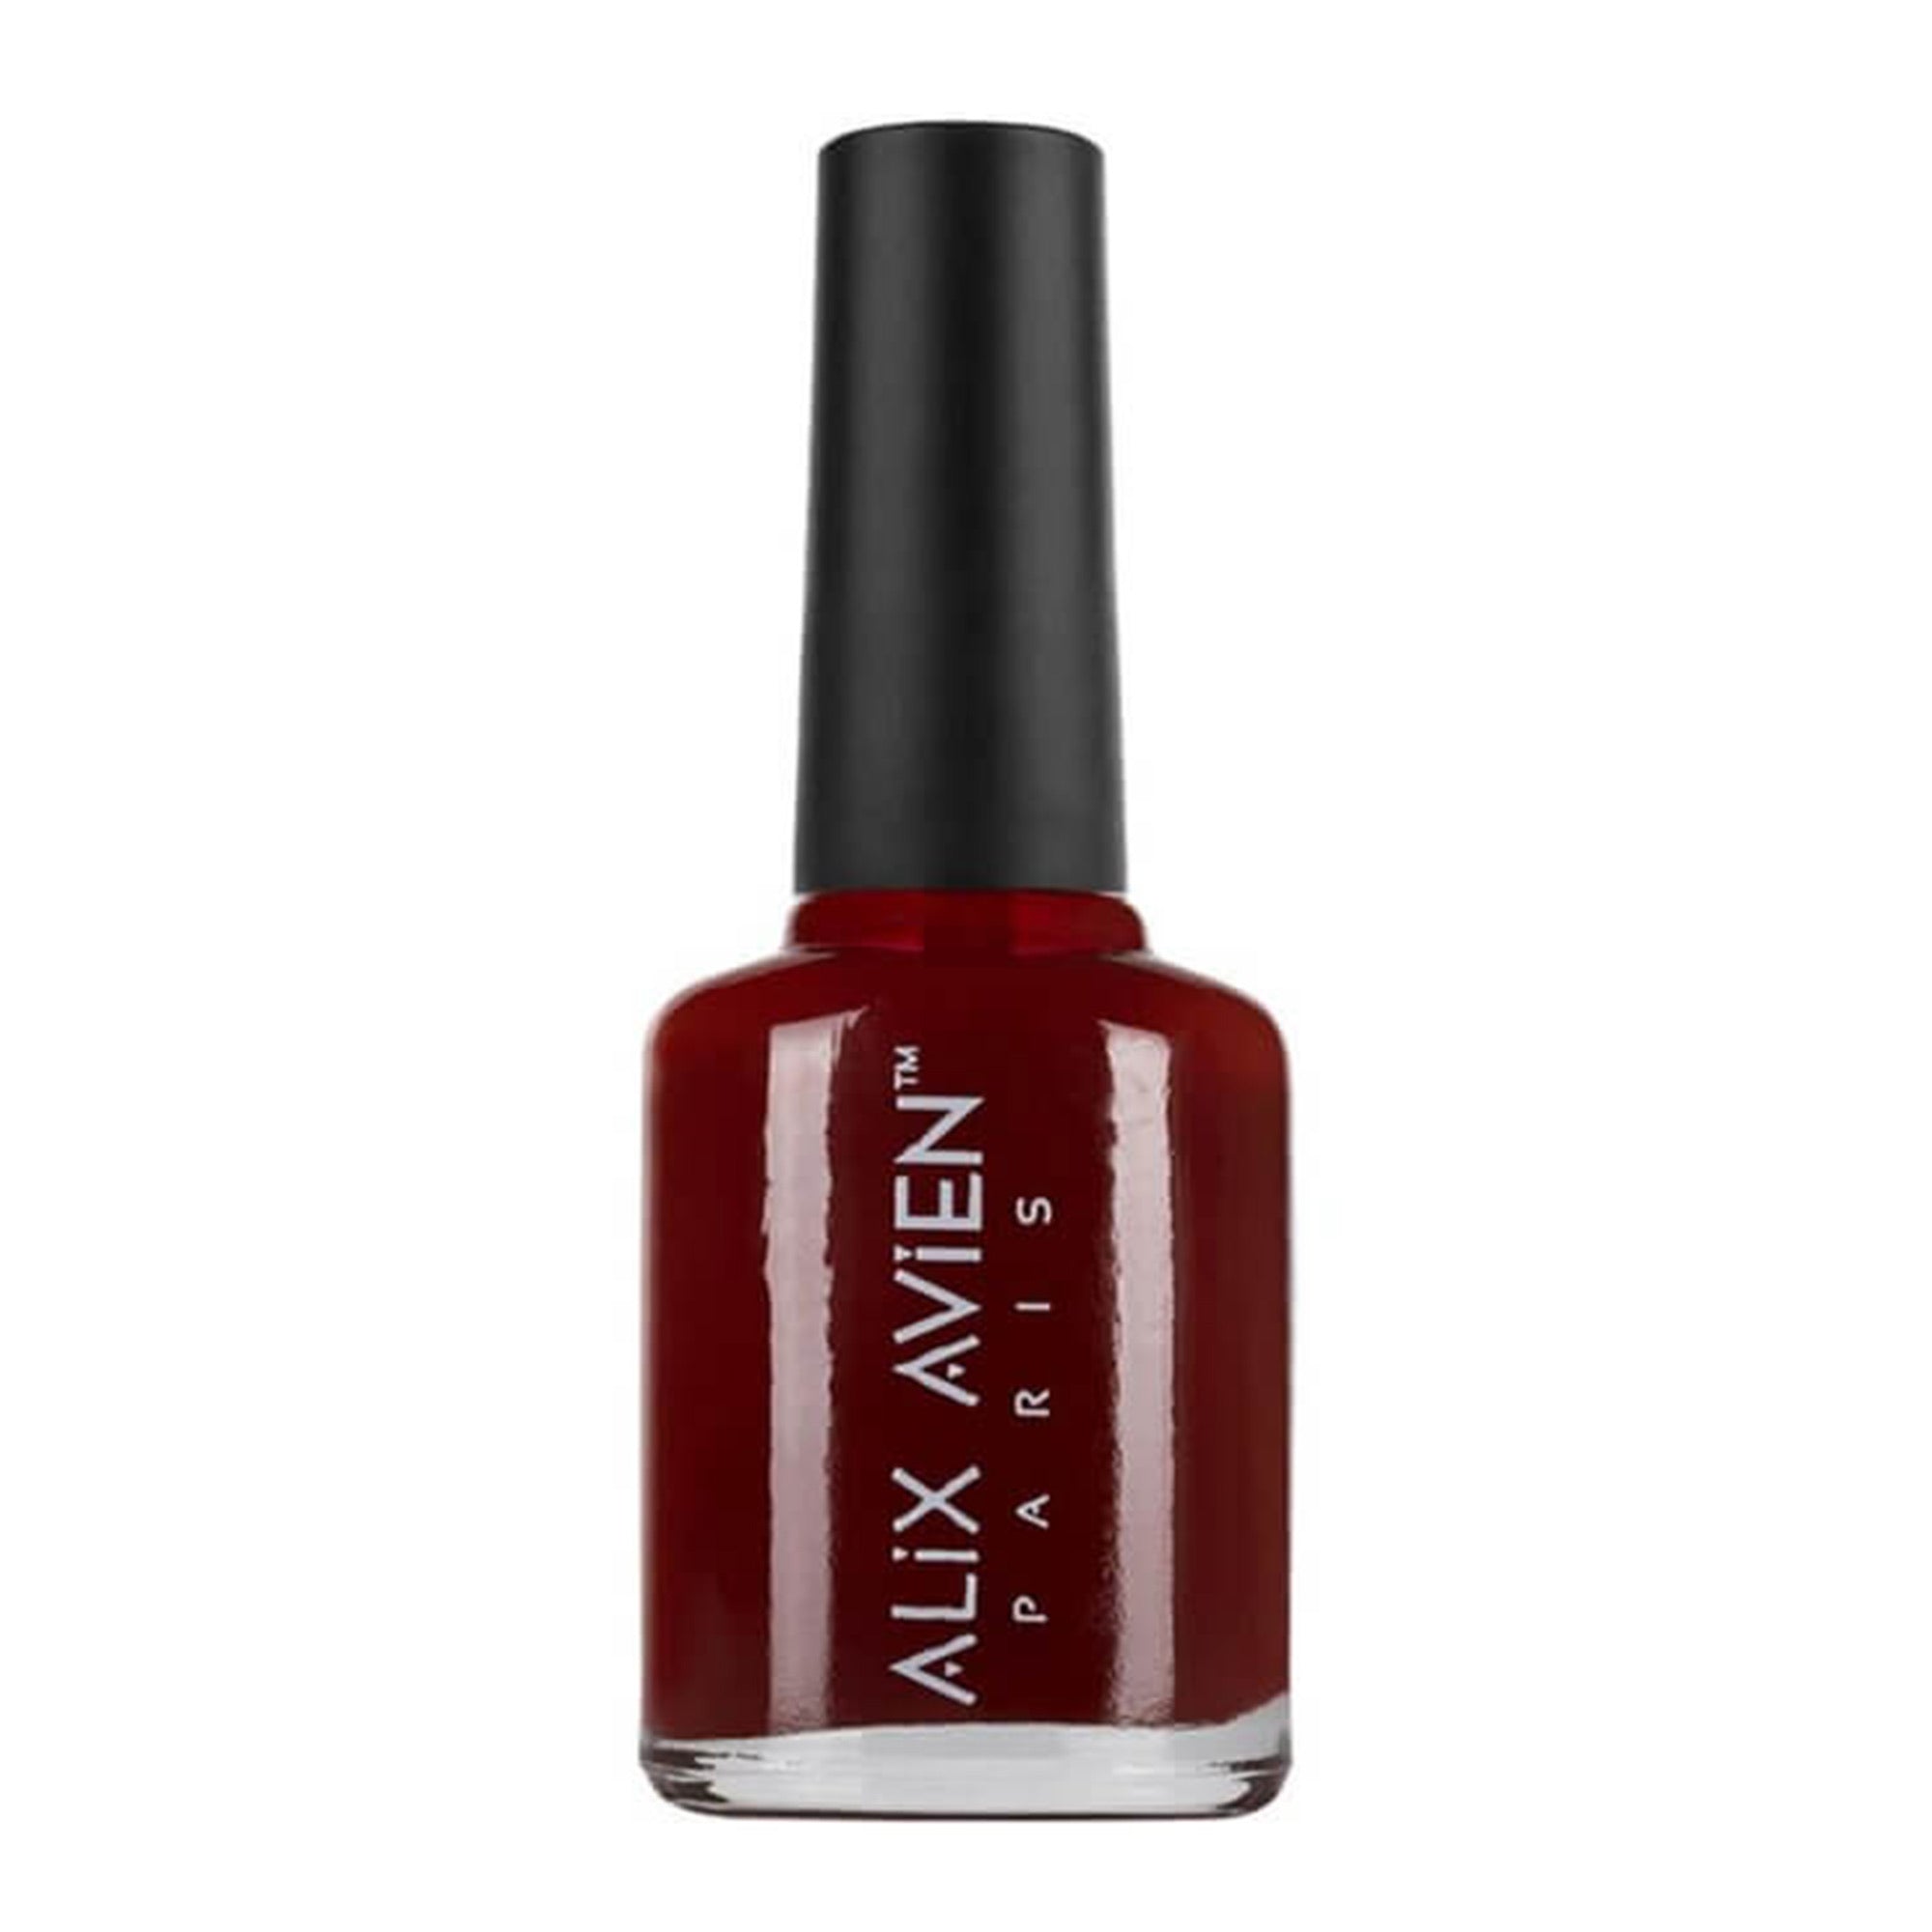 Alix Avien - Nail Polish No.17 (Dark Red)